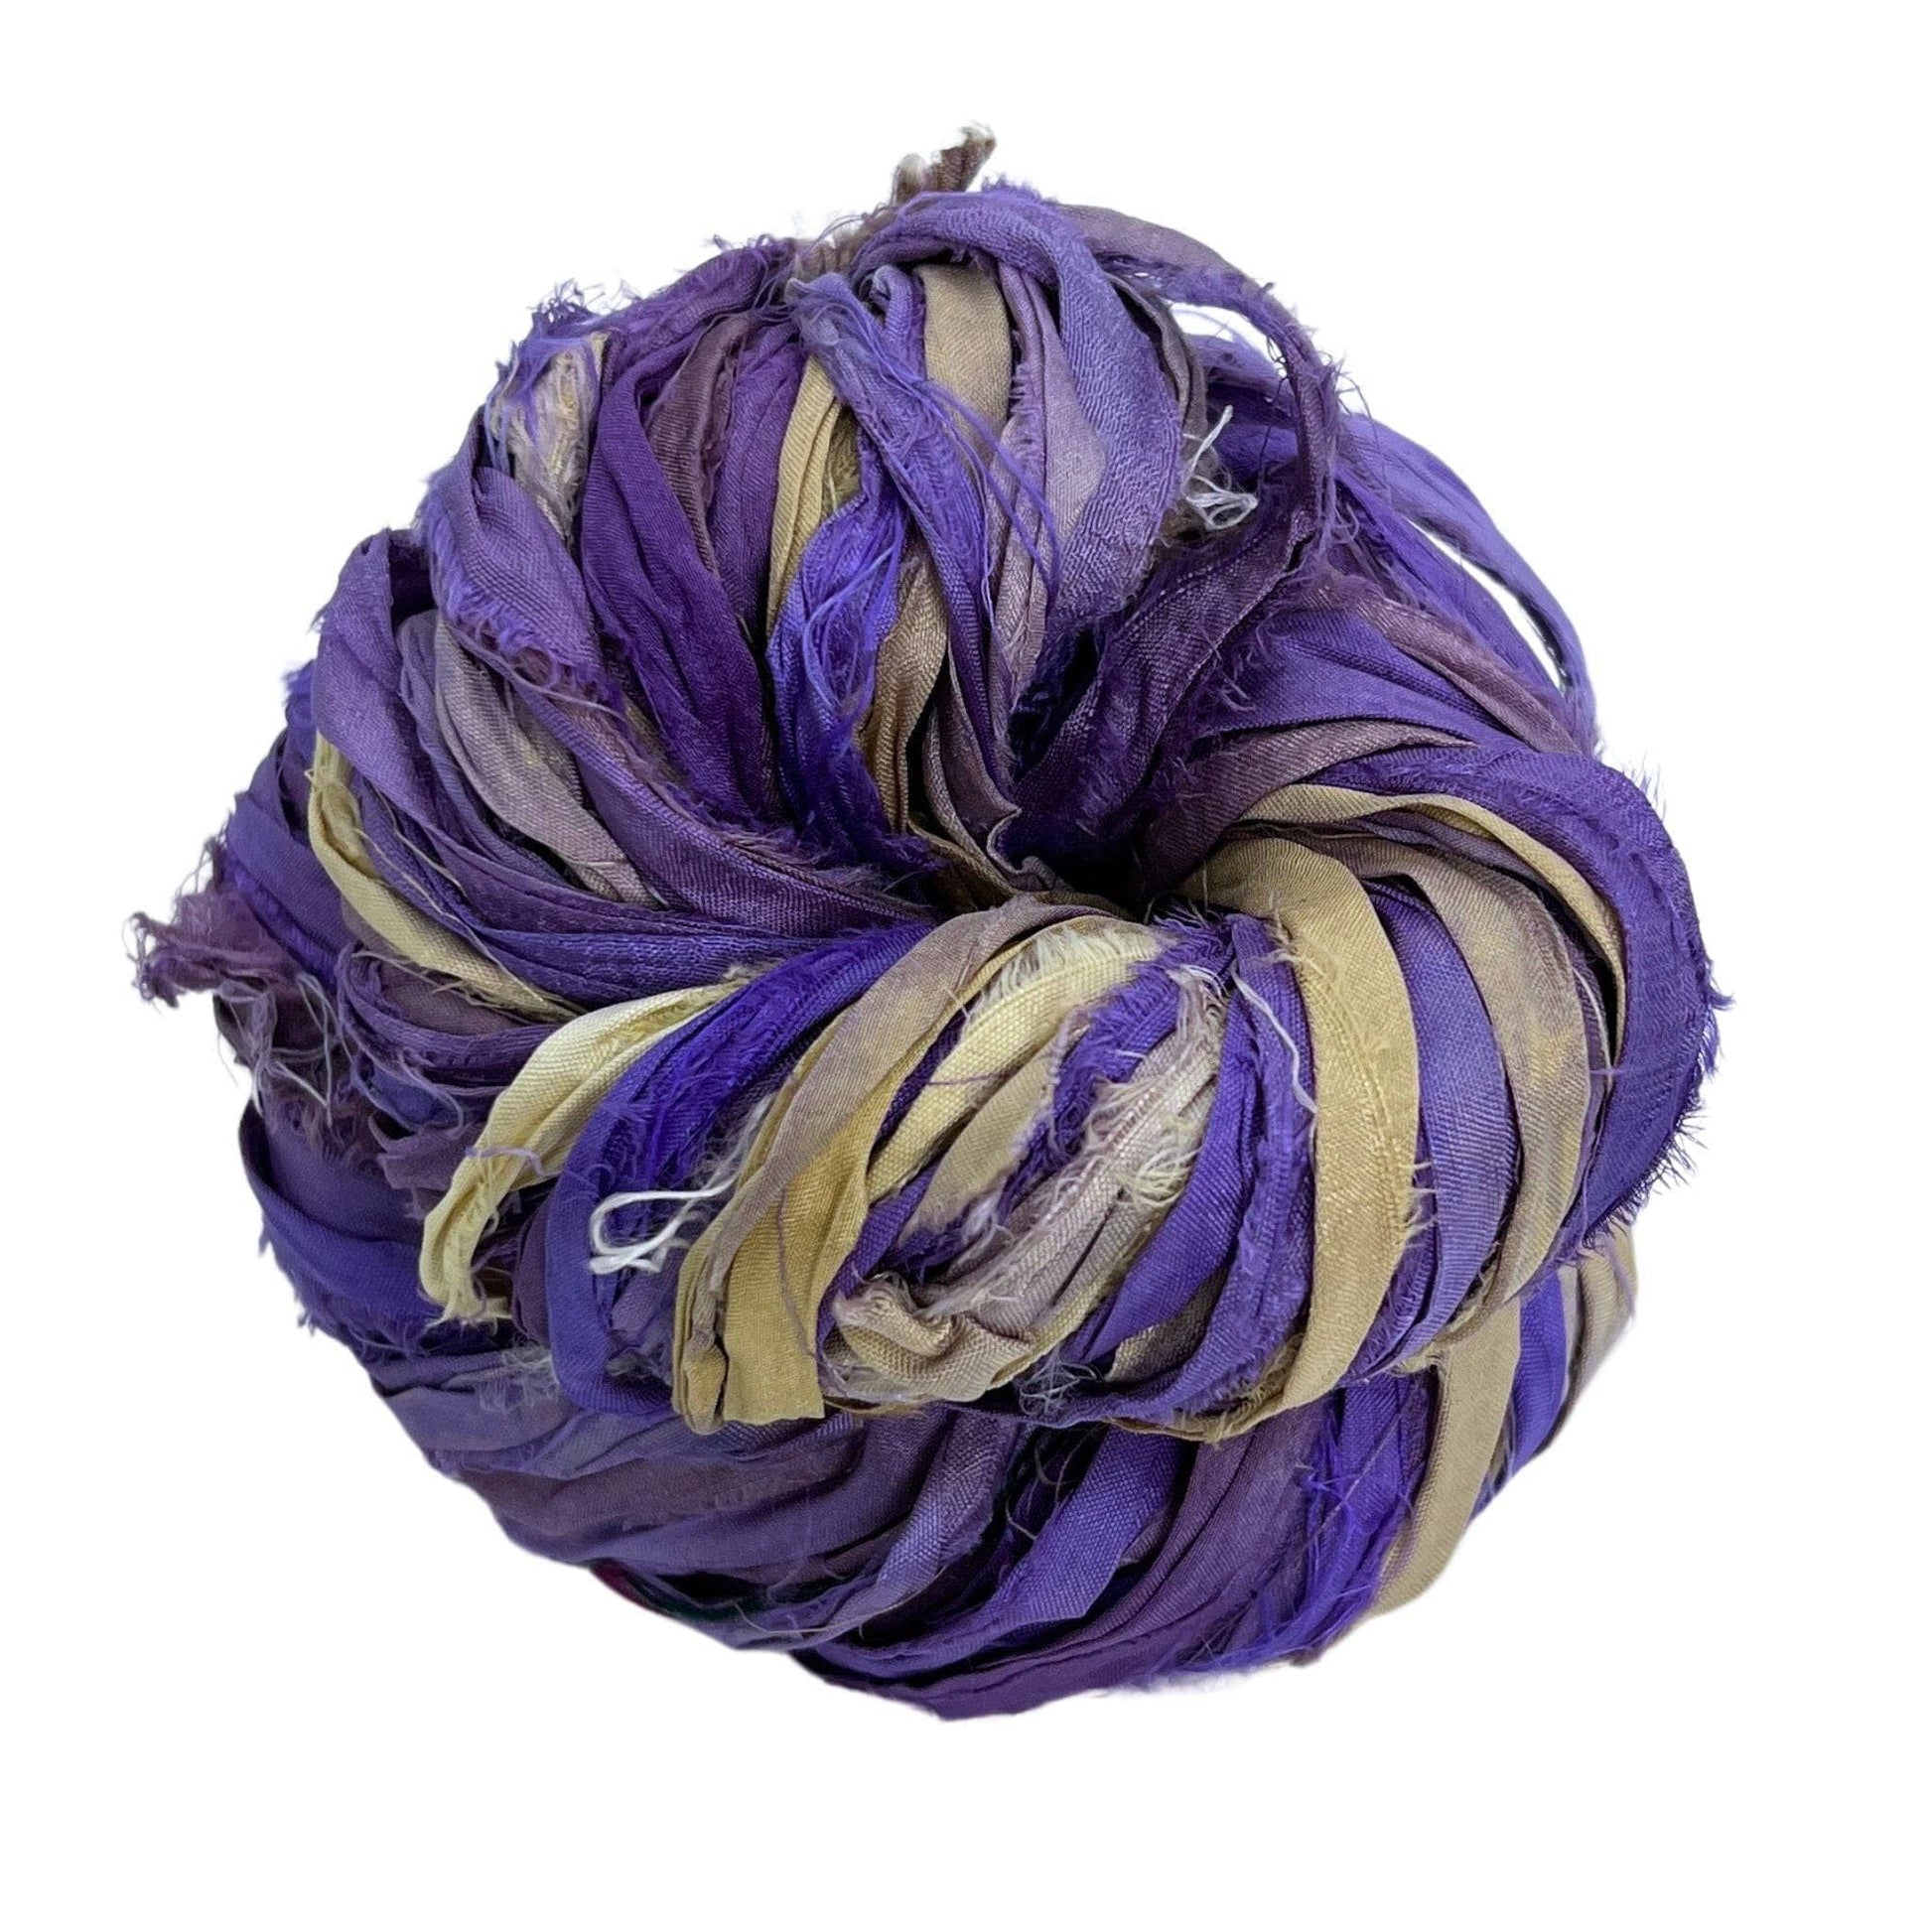 Buy Wholesale India Recycle Sari Silk Ribbon Yarn & Recycle Sari